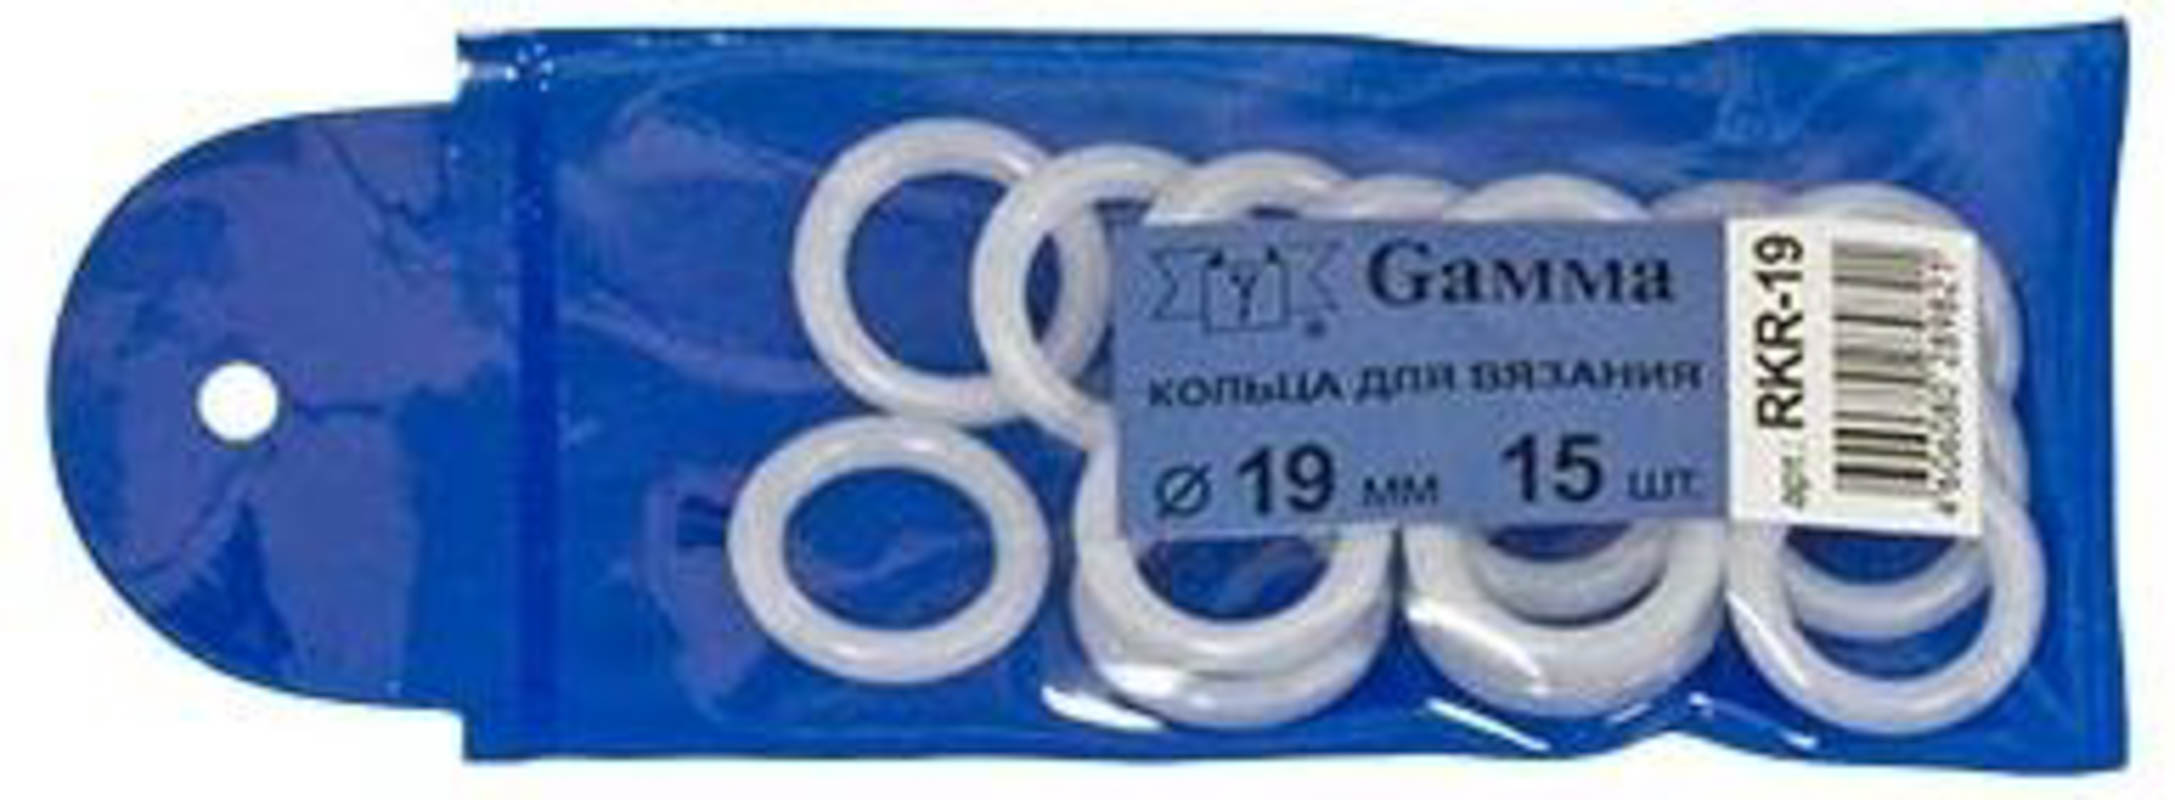 Кольца для вязания «Gamma» RKR-19, пластик, d=19 мм